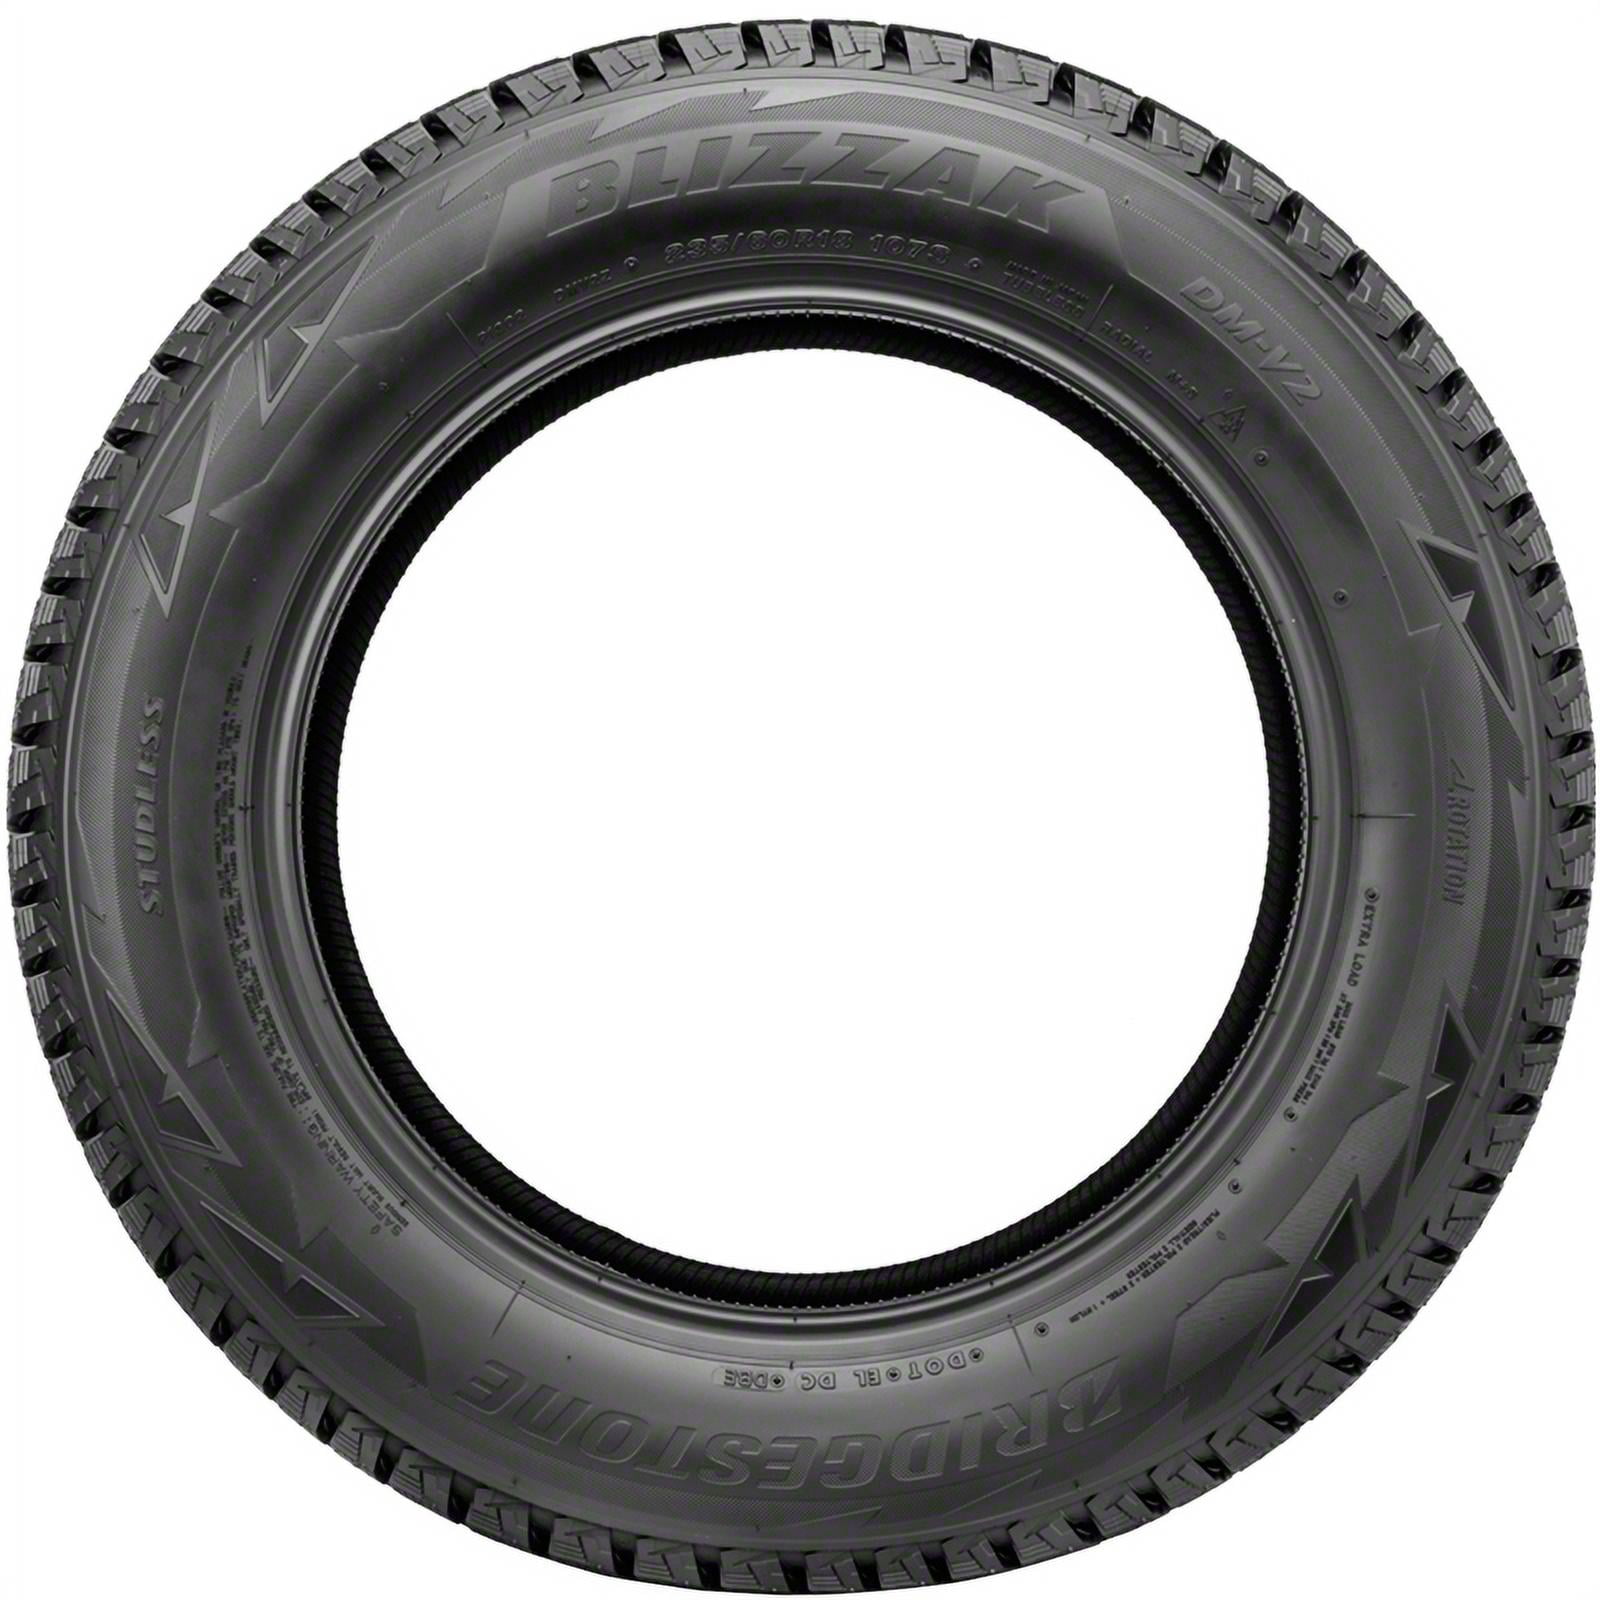 S DM-V2 235/65-17 108 Bridgestone Tire Blizzak